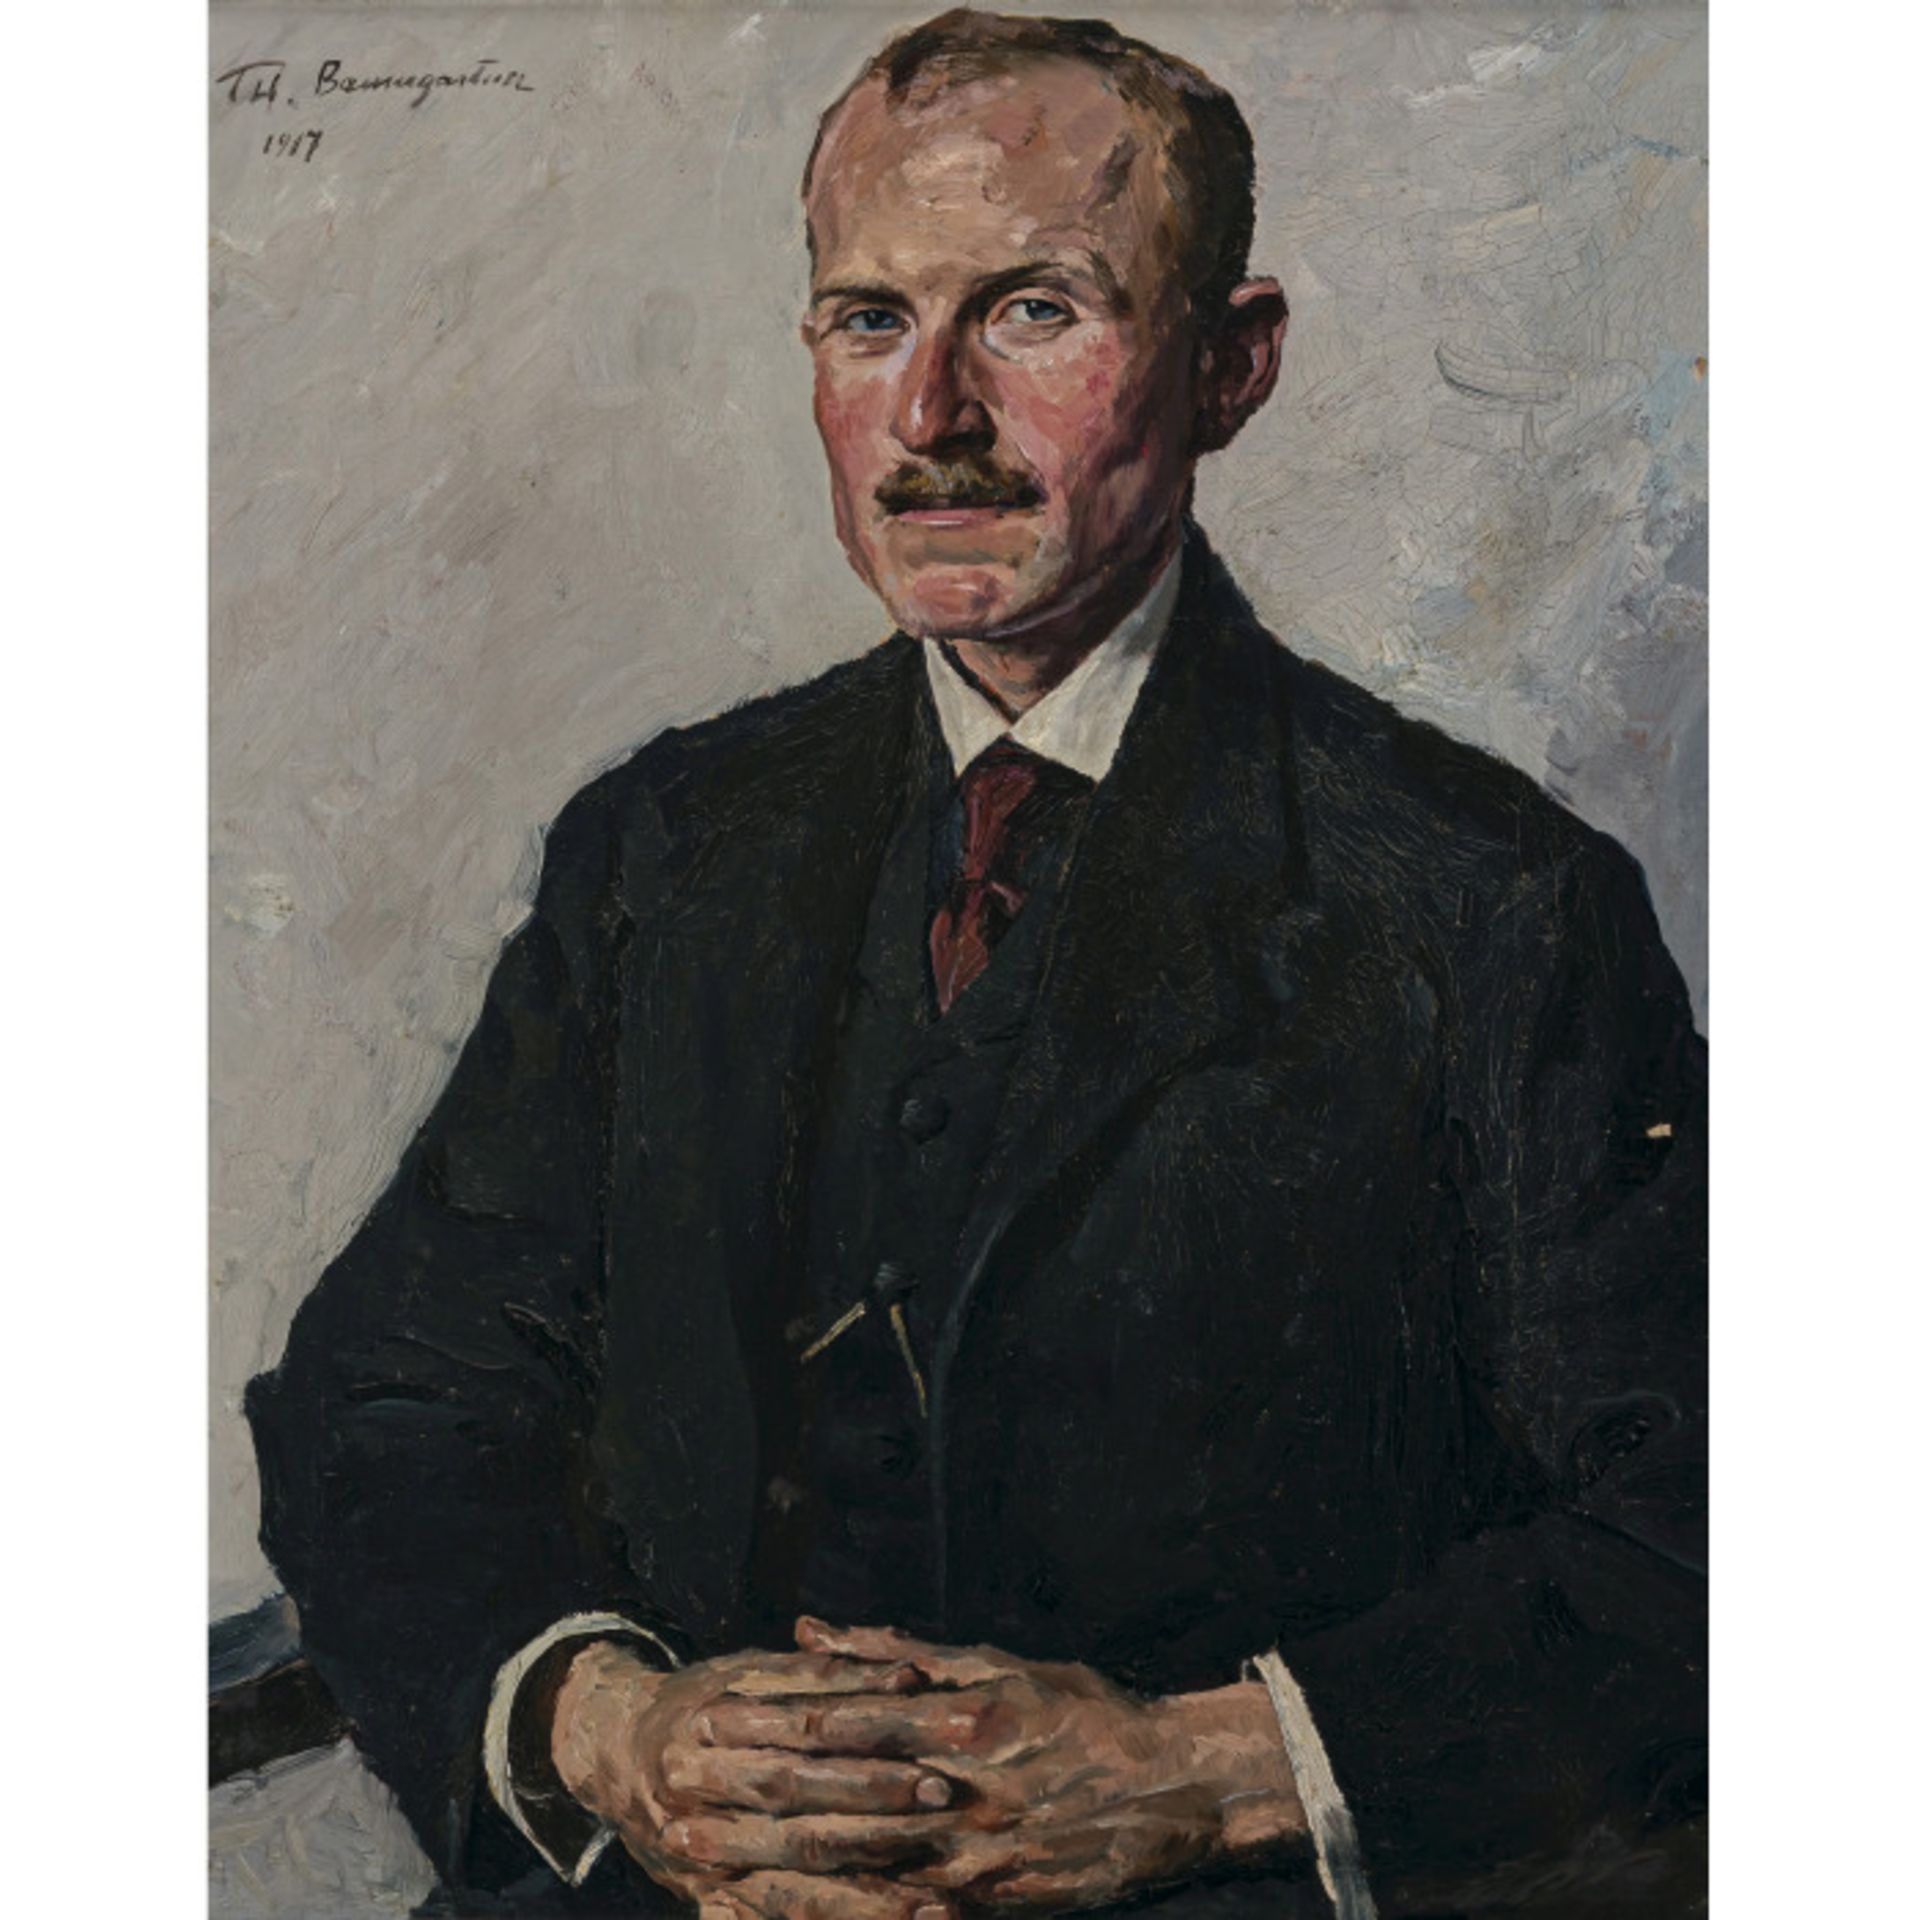 Thomas Baumgartner - Herrenbildnis. 1917